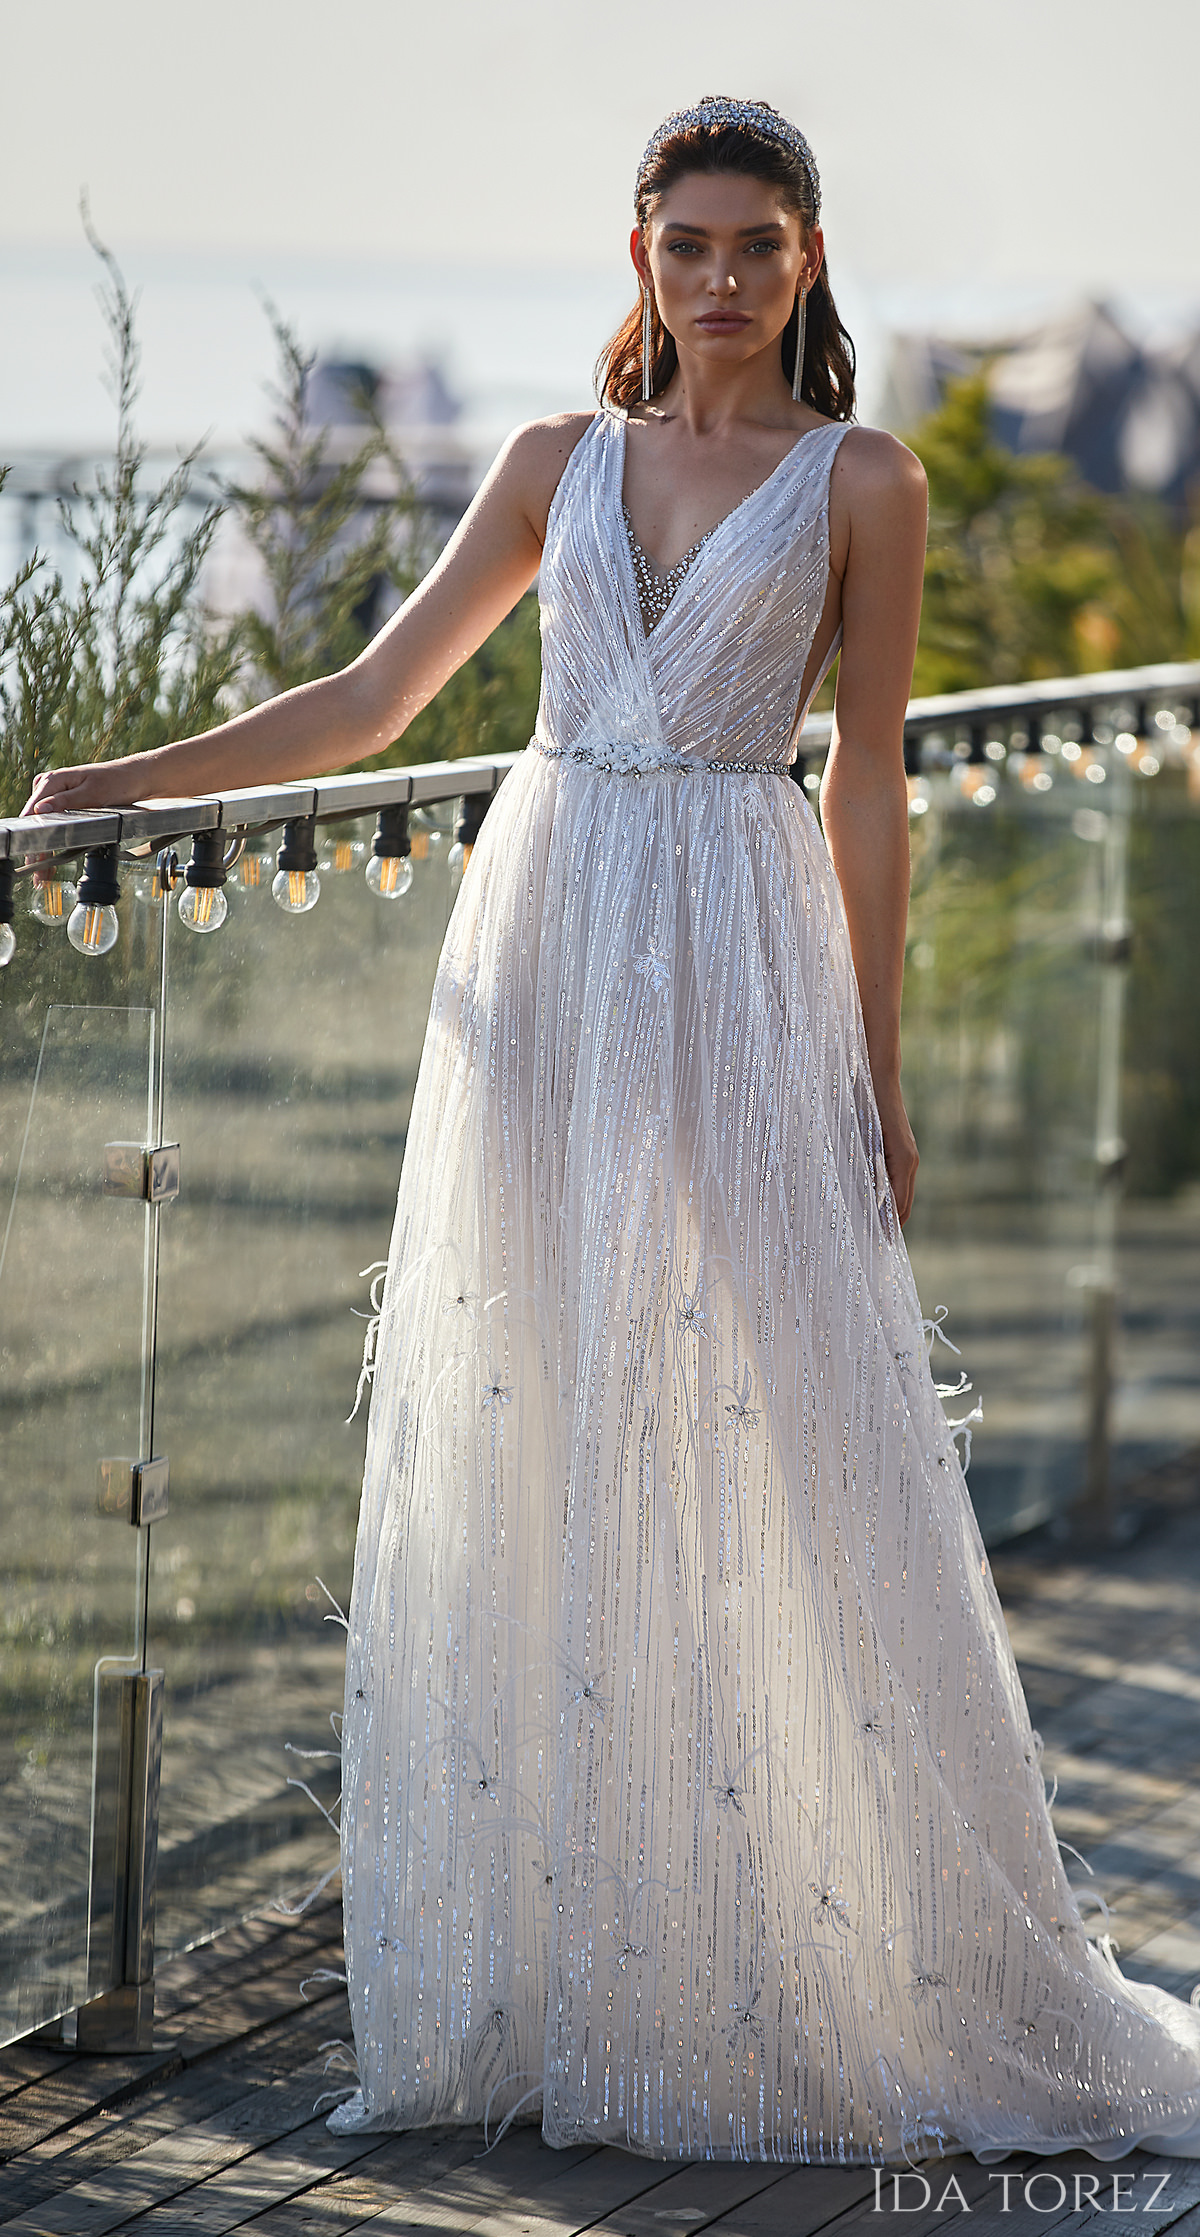 Ida Torez Wedding Dresses 2021 Brave Glanze Collection - 01224- Absorbing beauty